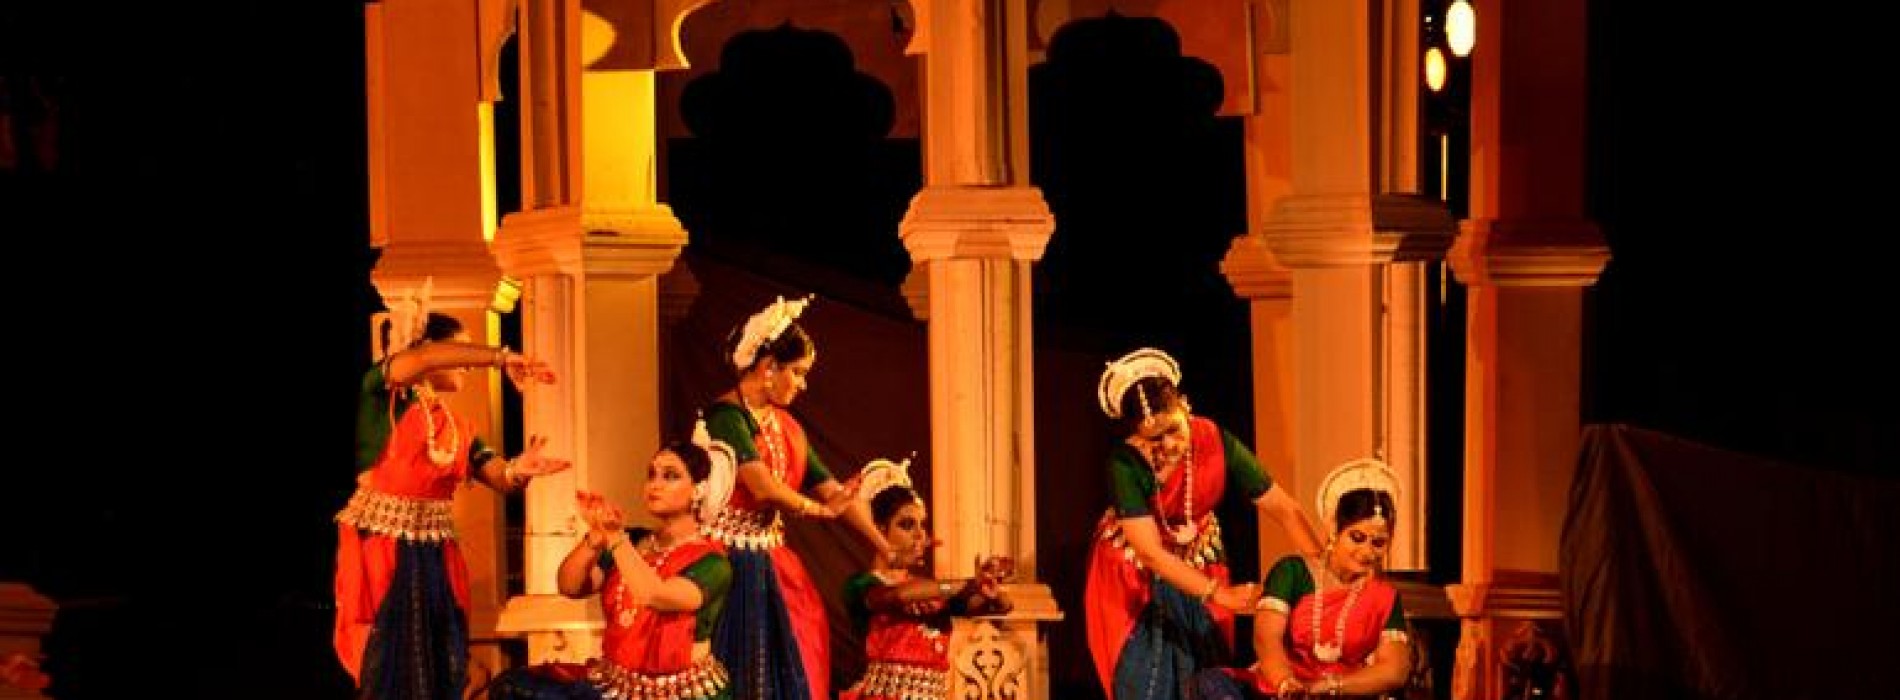 Khajuraho Dance Festival: panorama of cultural heritage